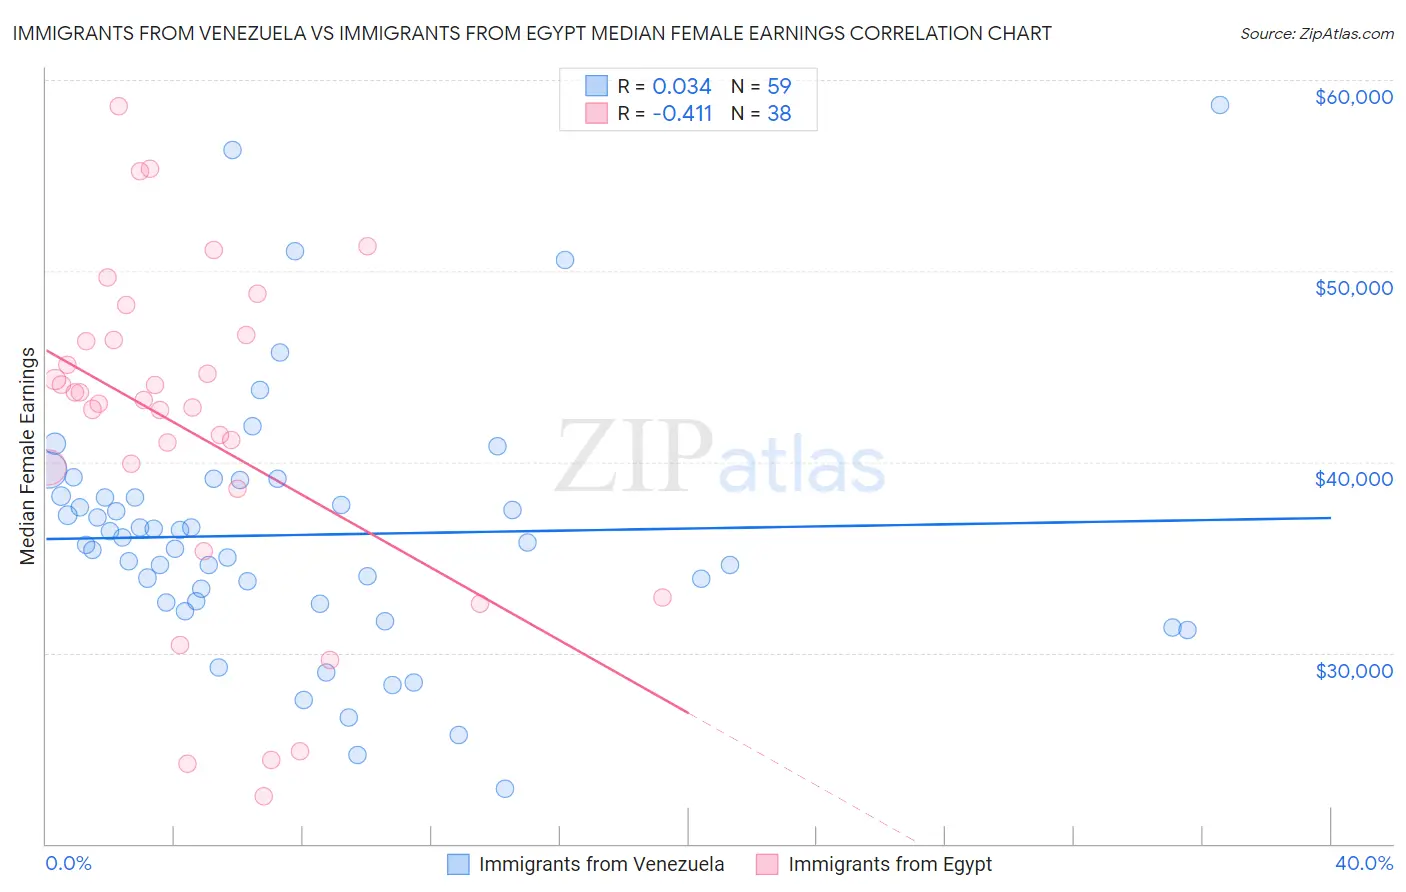 Immigrants from Venezuela vs Immigrants from Egypt Median Female Earnings